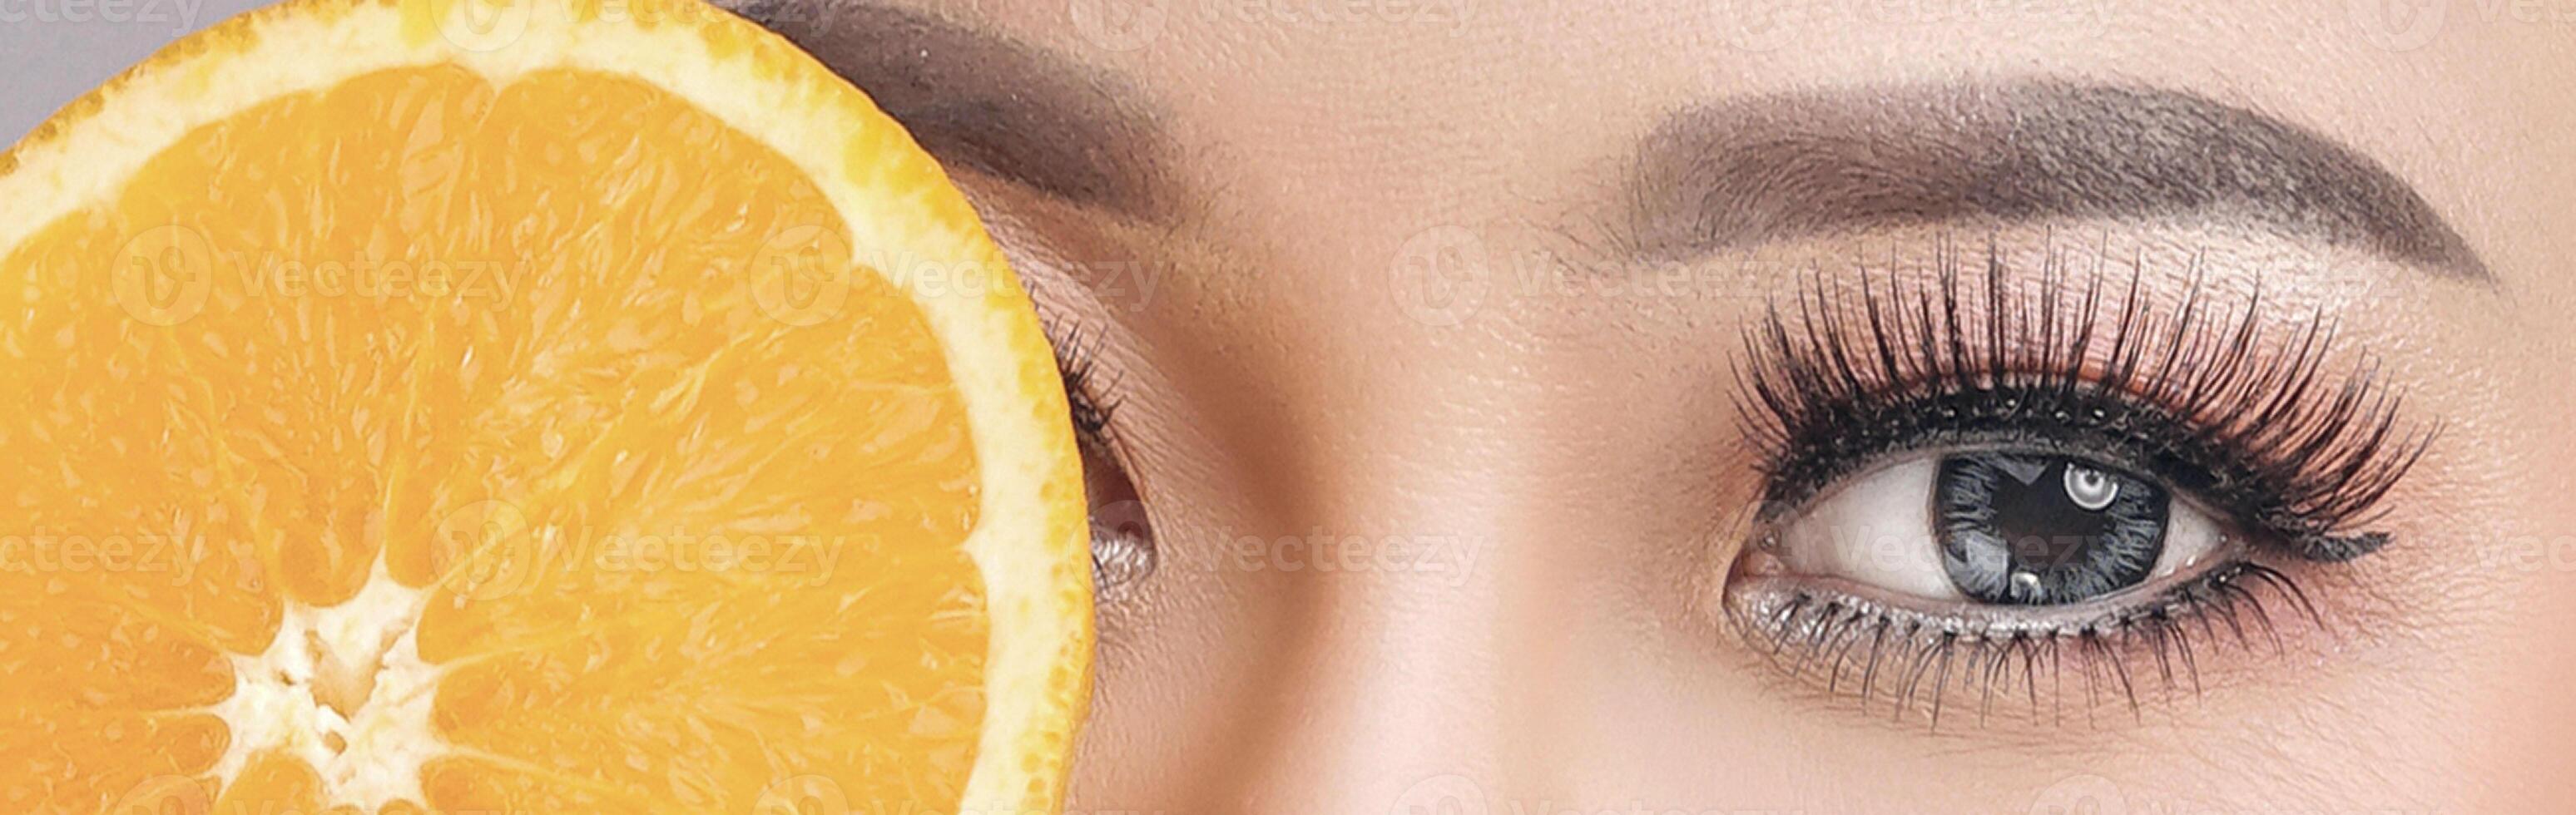 Close up image of healthy human woman eye with women eyelashes photo